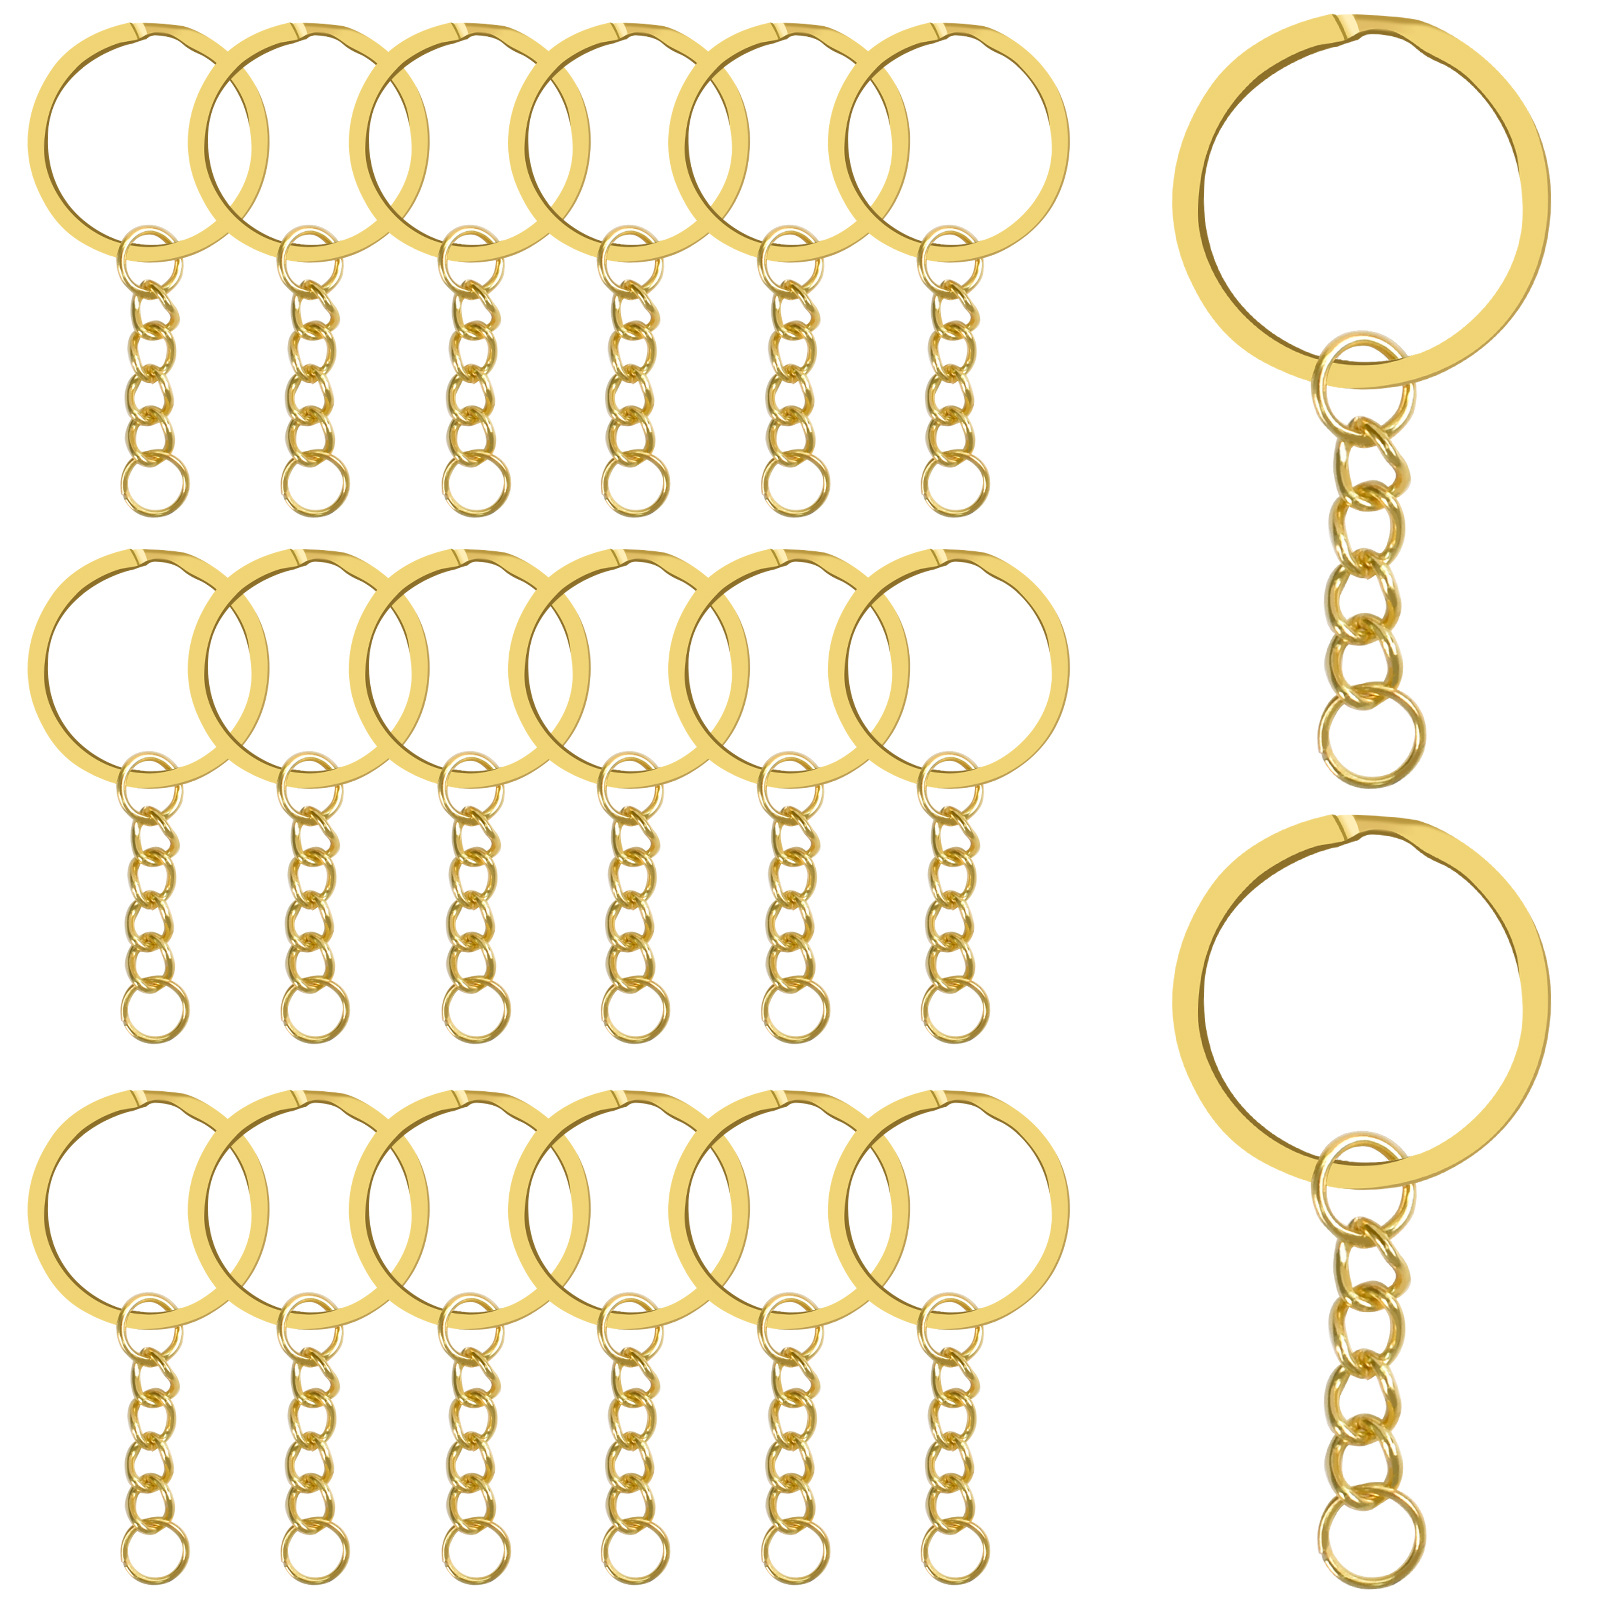 20Pcs Split Key Rings,Gold Plated Key Rings,Key Ring Findings,keychain  rings 30mm